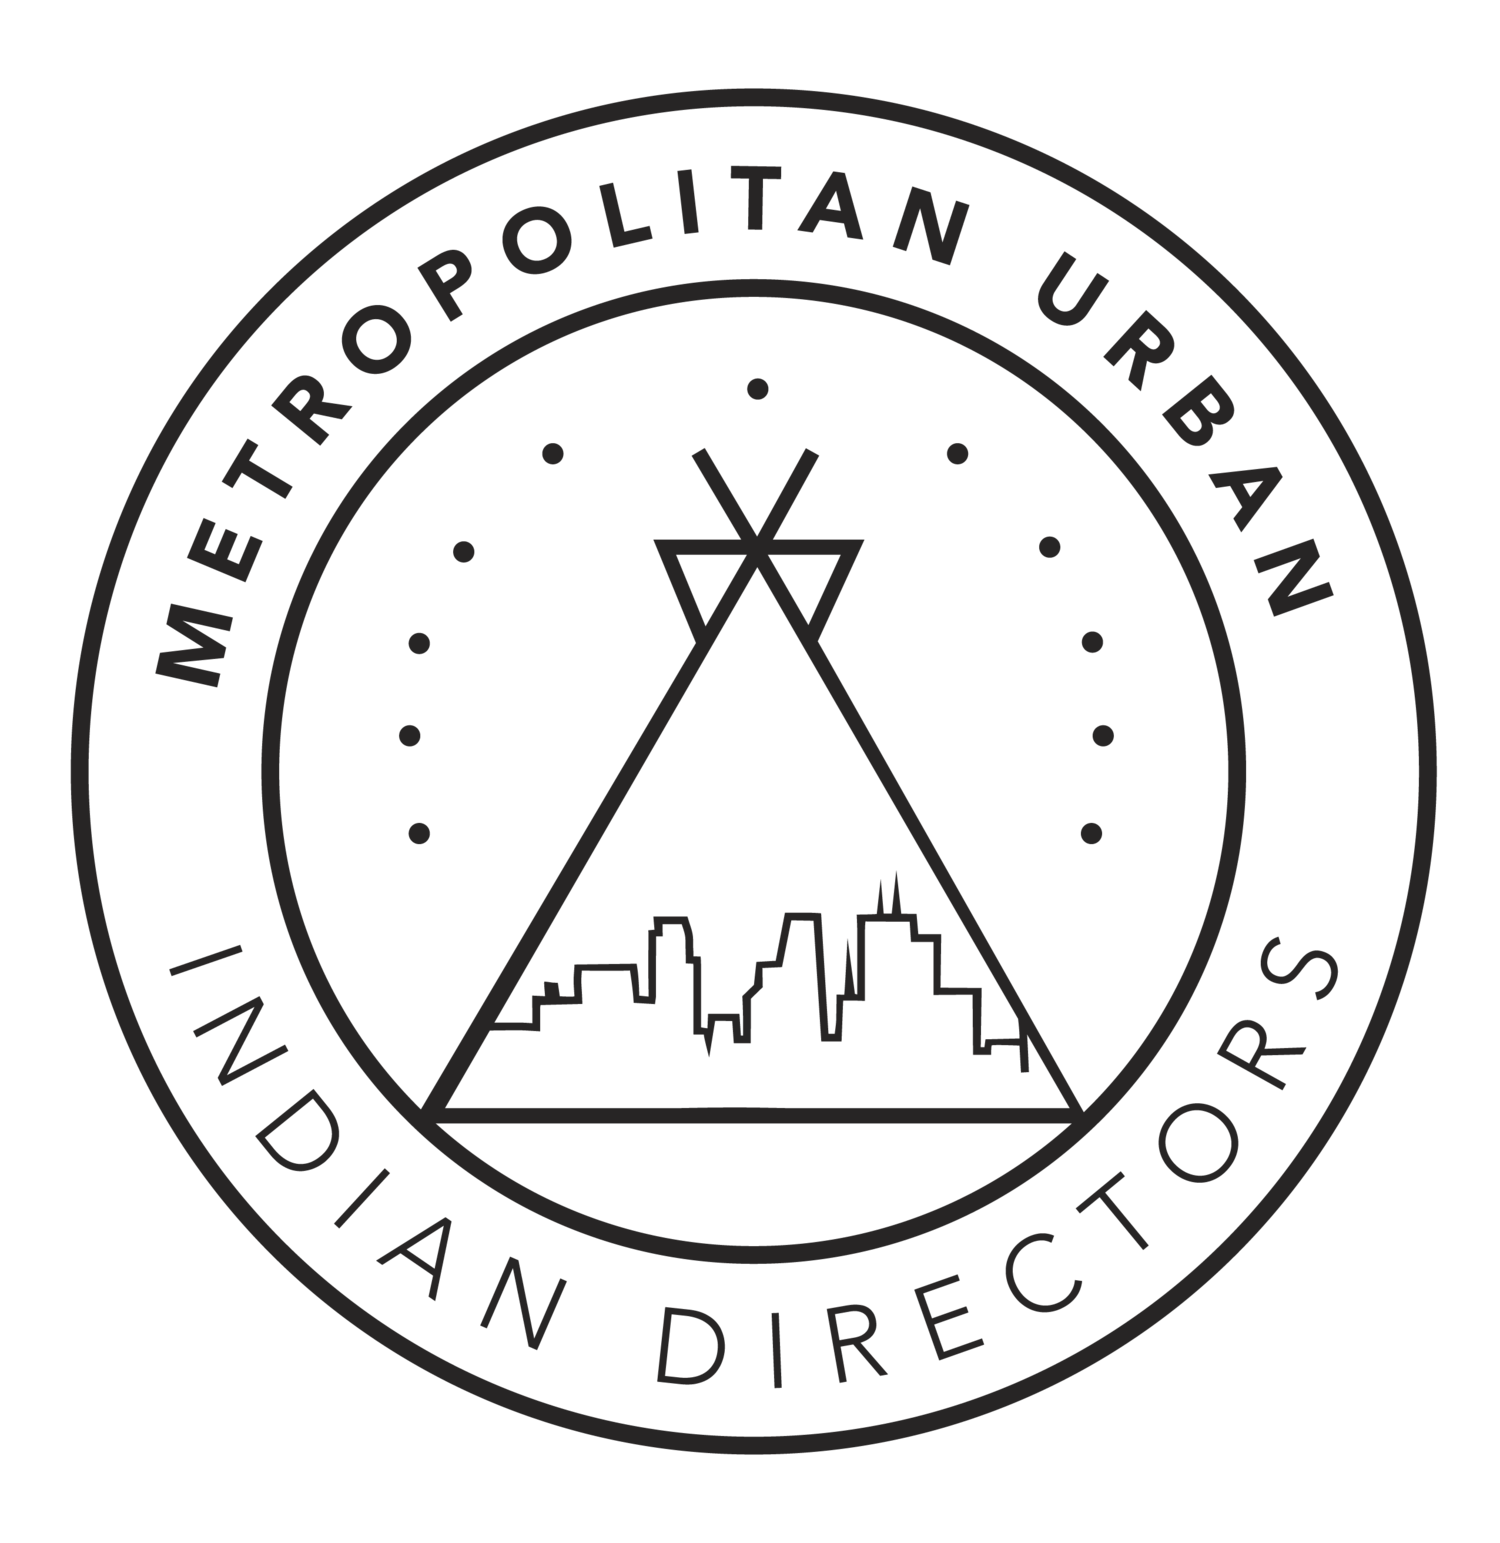 Metro Urban Indian Directors